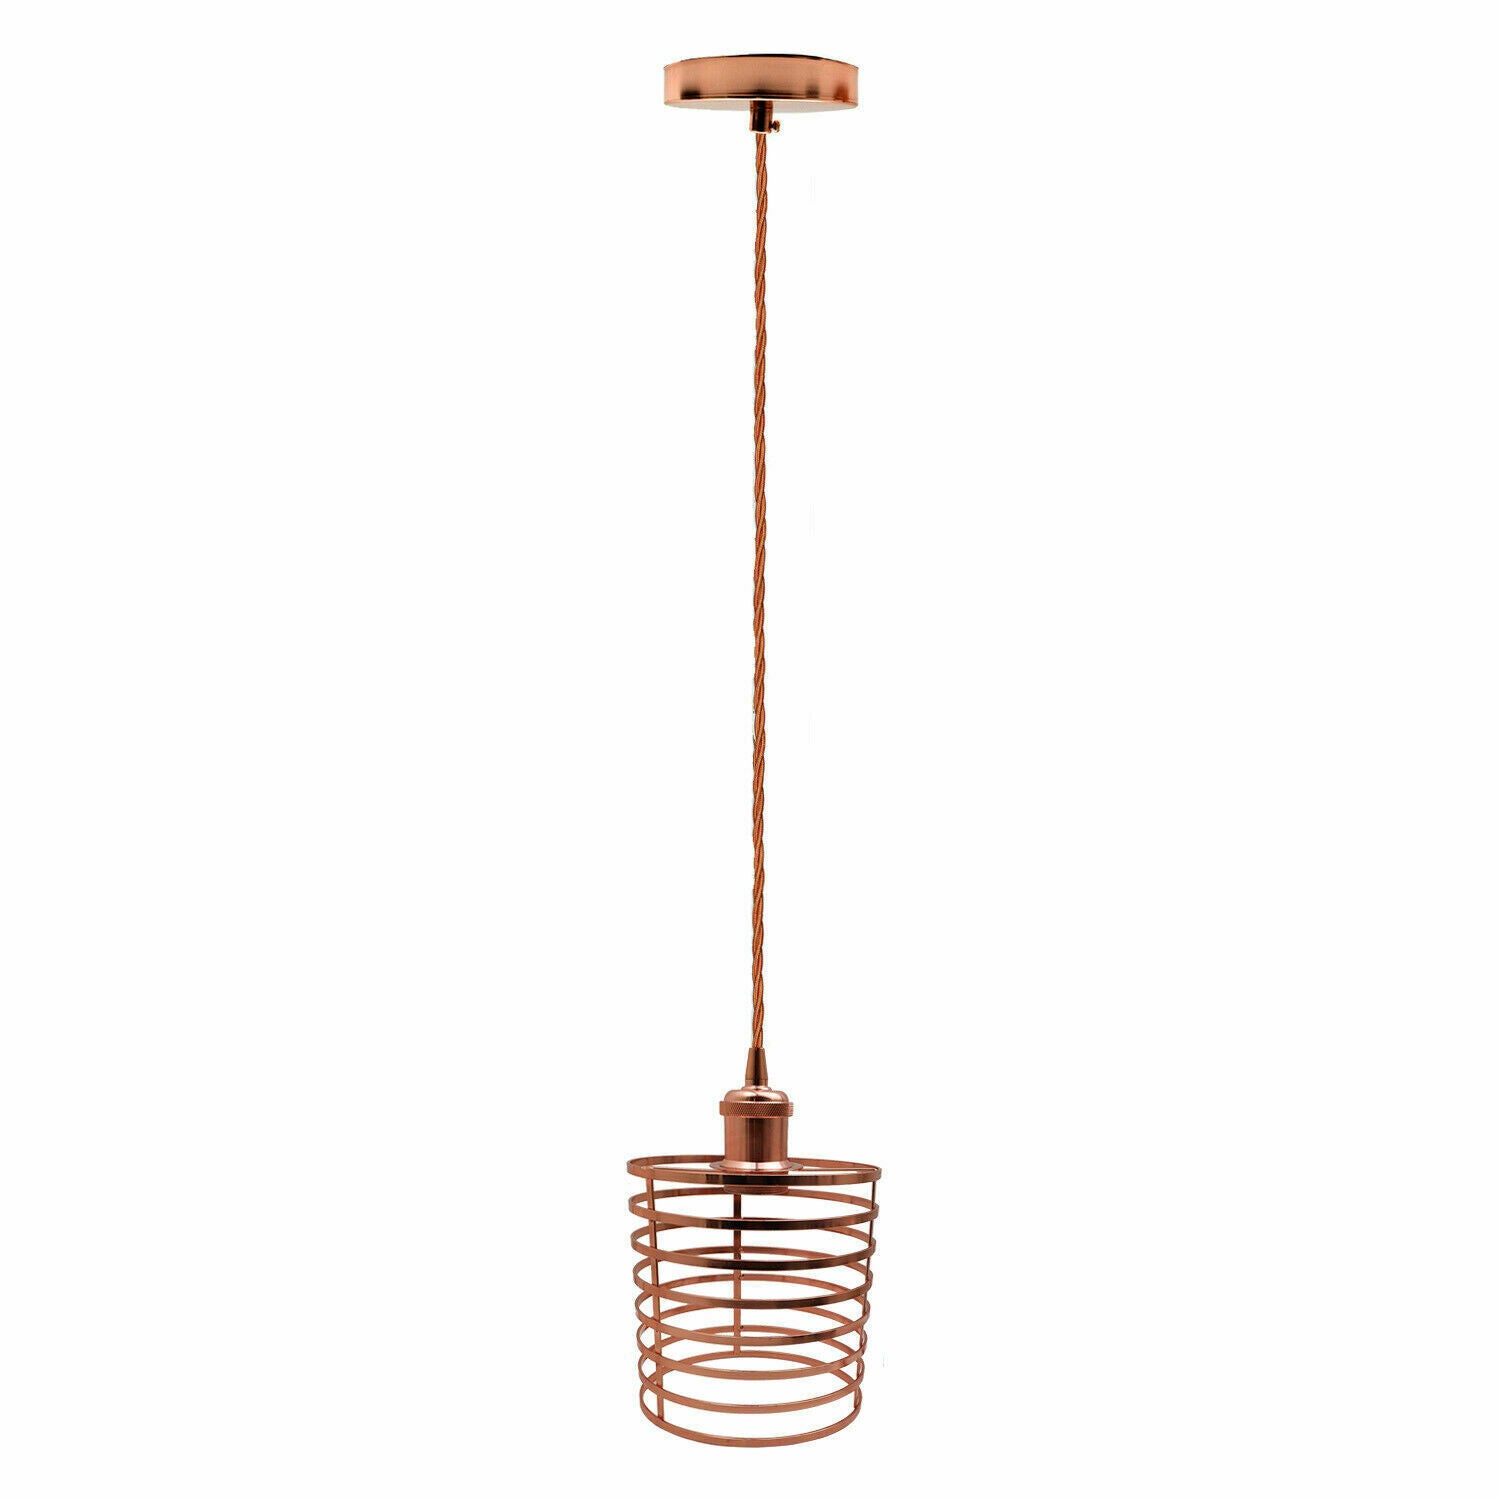 Vintage Industrial Retro Loft Wire Cage Lamp Shade Pendant Light